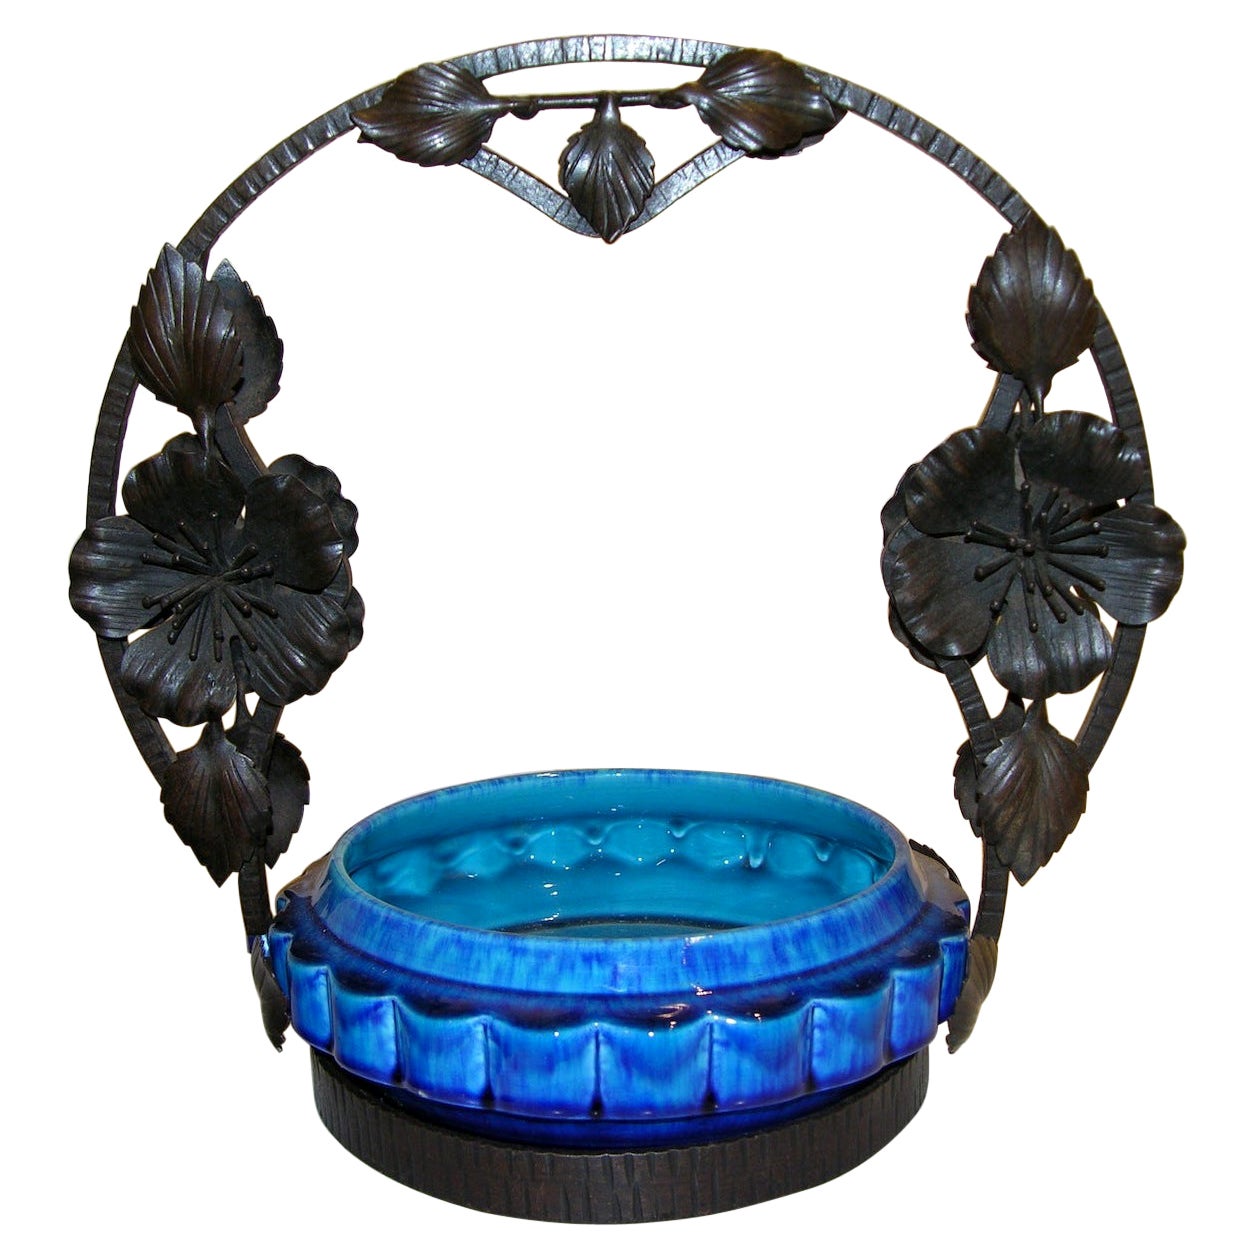 French Art Nouveau Paul Milet Sevres Ceramic Flower Wrought Iron Turquoise Bowl For Sale